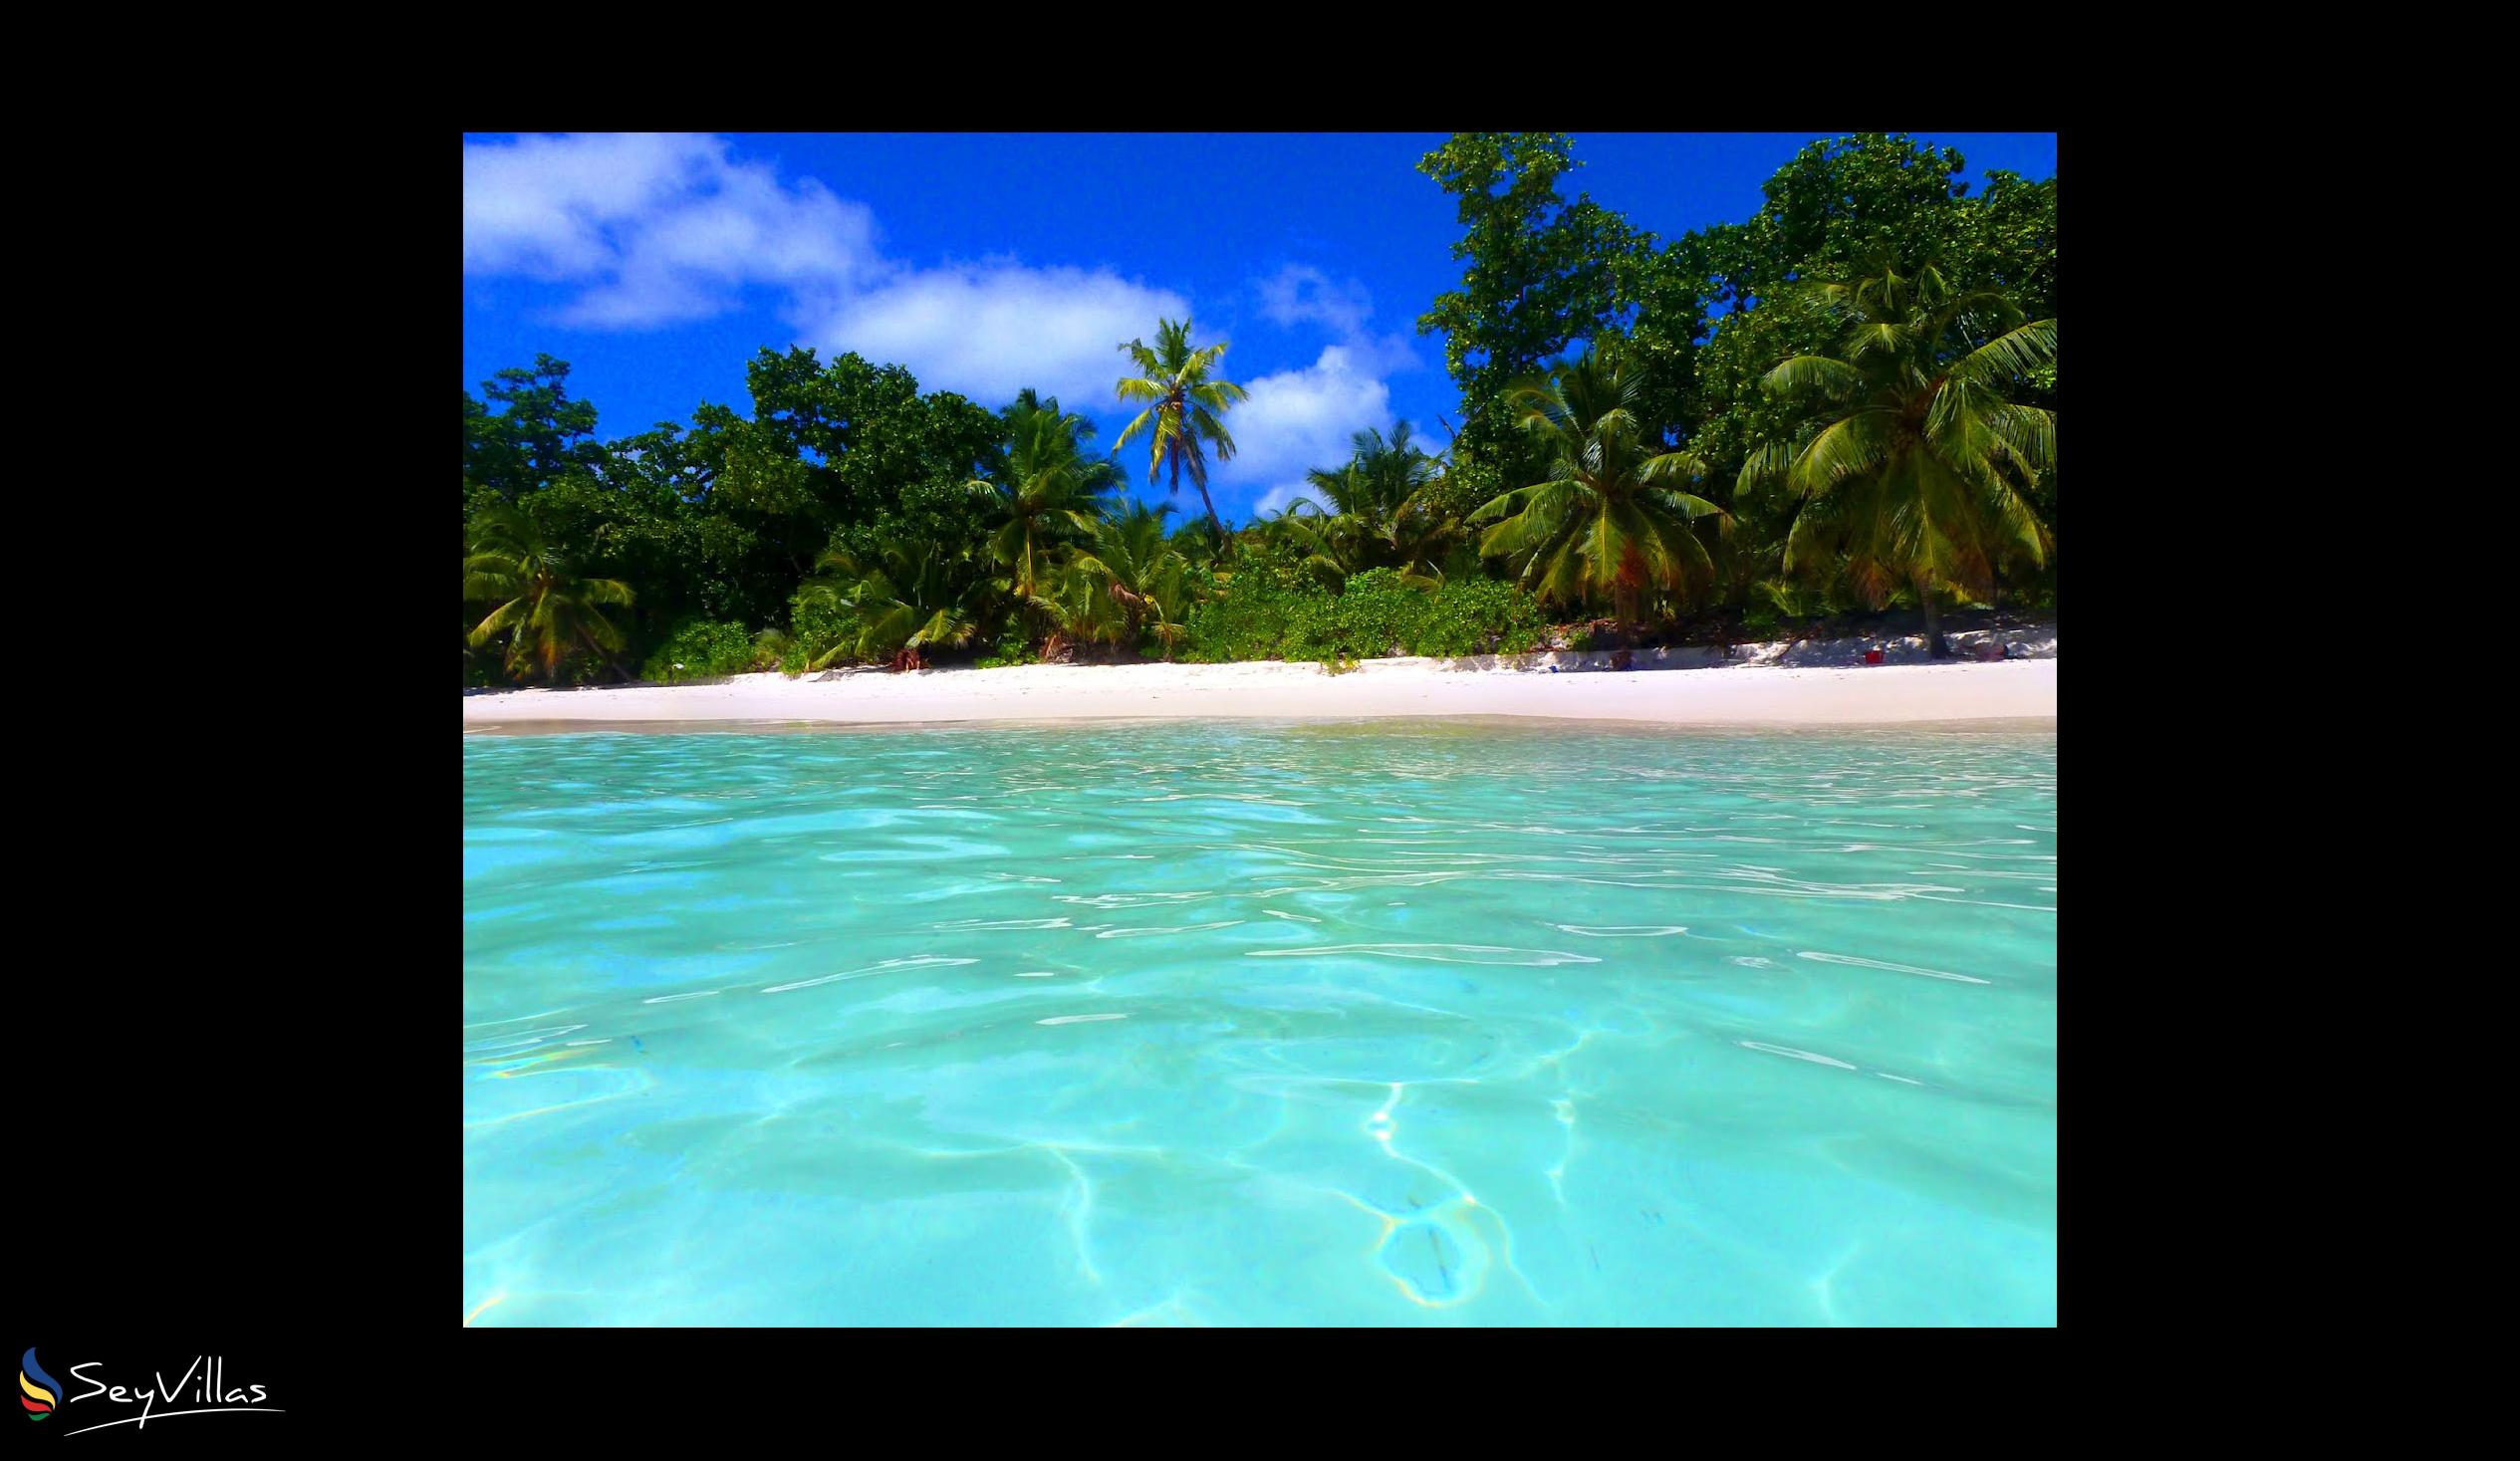 Photo 43: Hide Away - Beaches - Praslin (Seychelles)